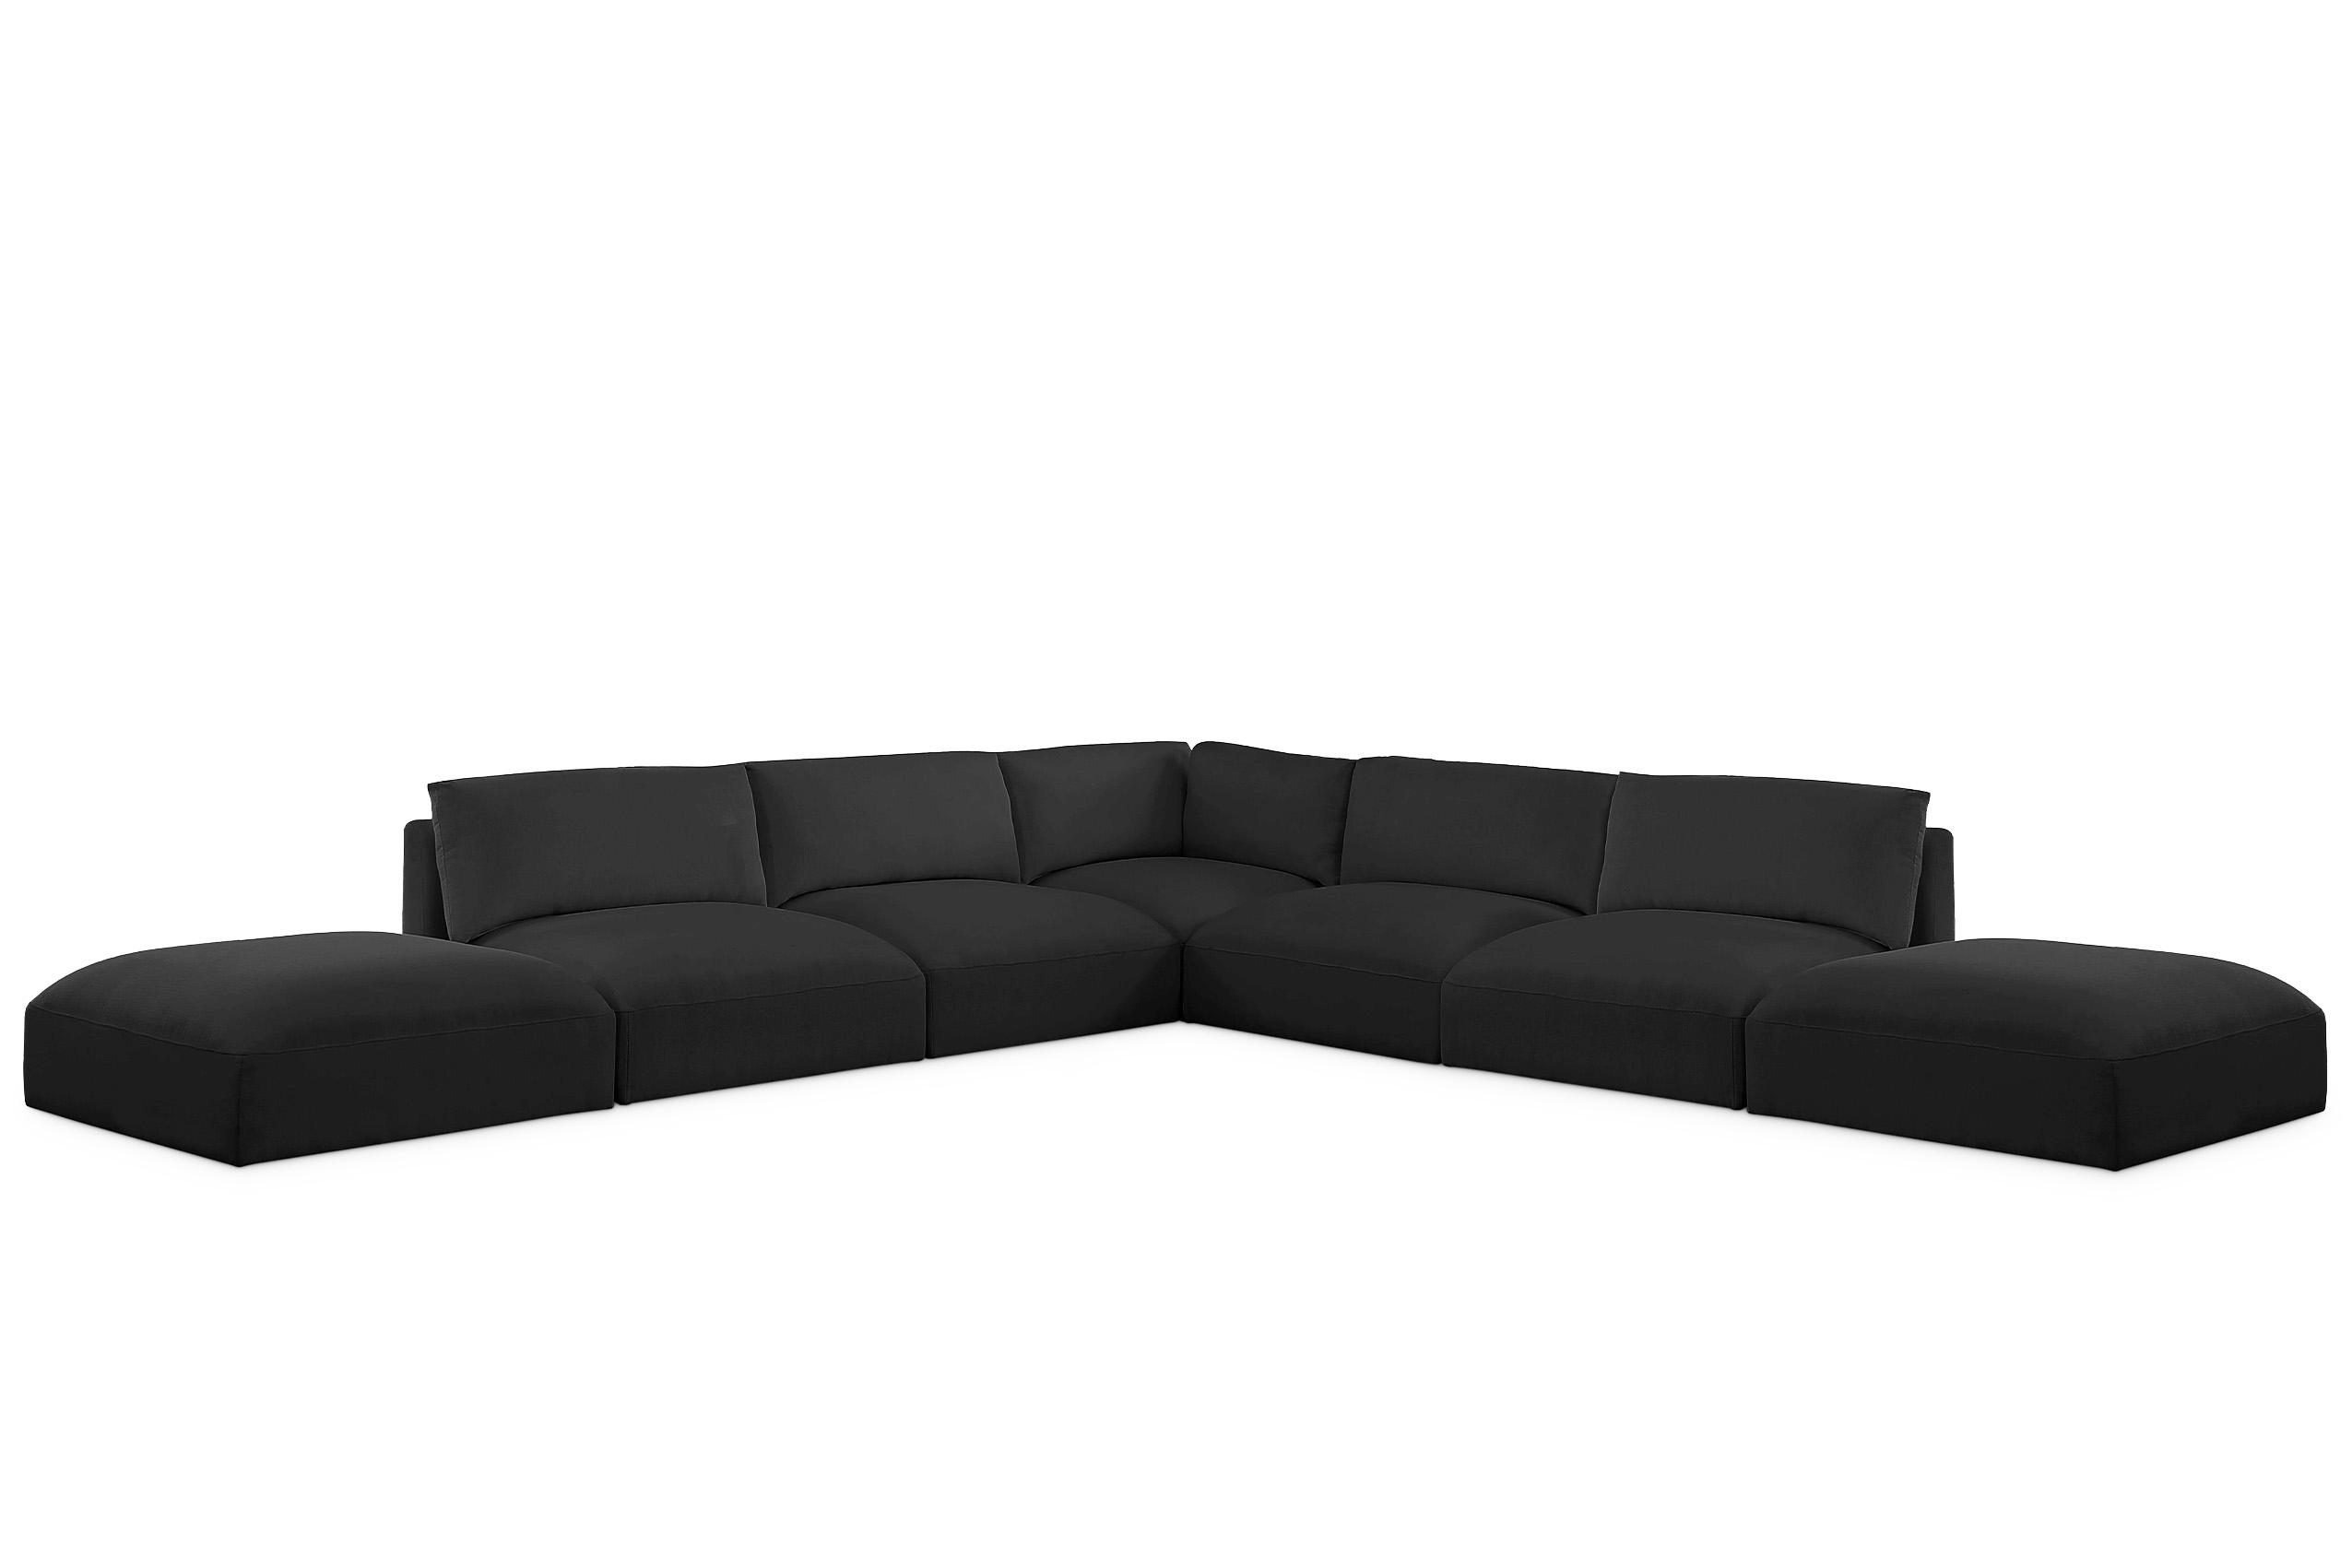 Contemporary, Modern Modular Sectional Sofa EASE 696Black-Sec7C 696Black-Sec7C in Black Fabric